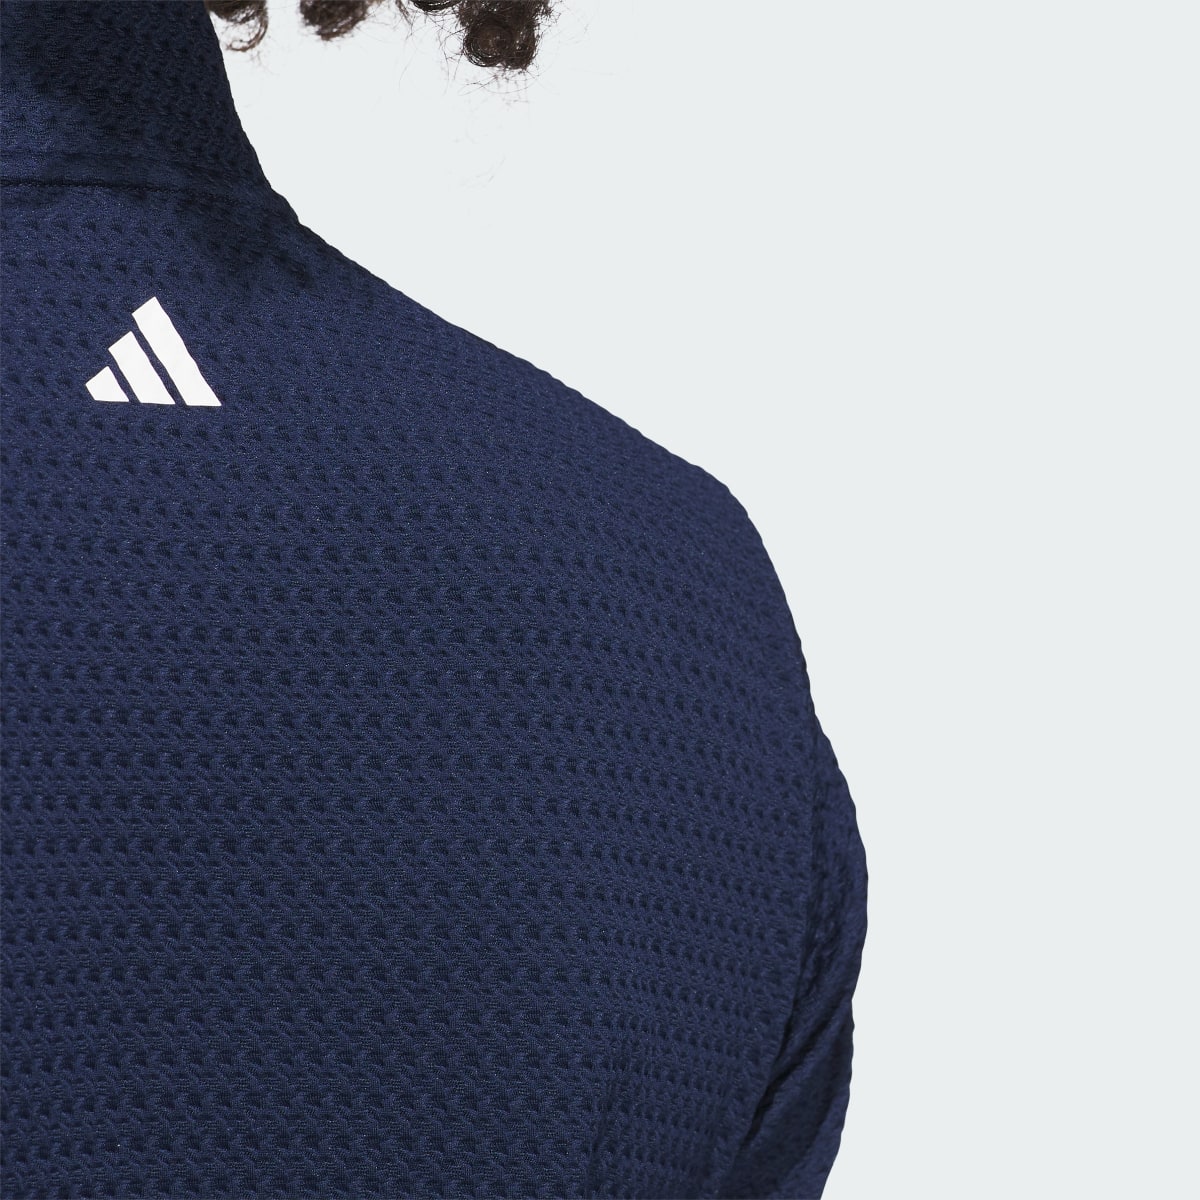 Adidas Women's Ultimate365 Textured Jacket. 7